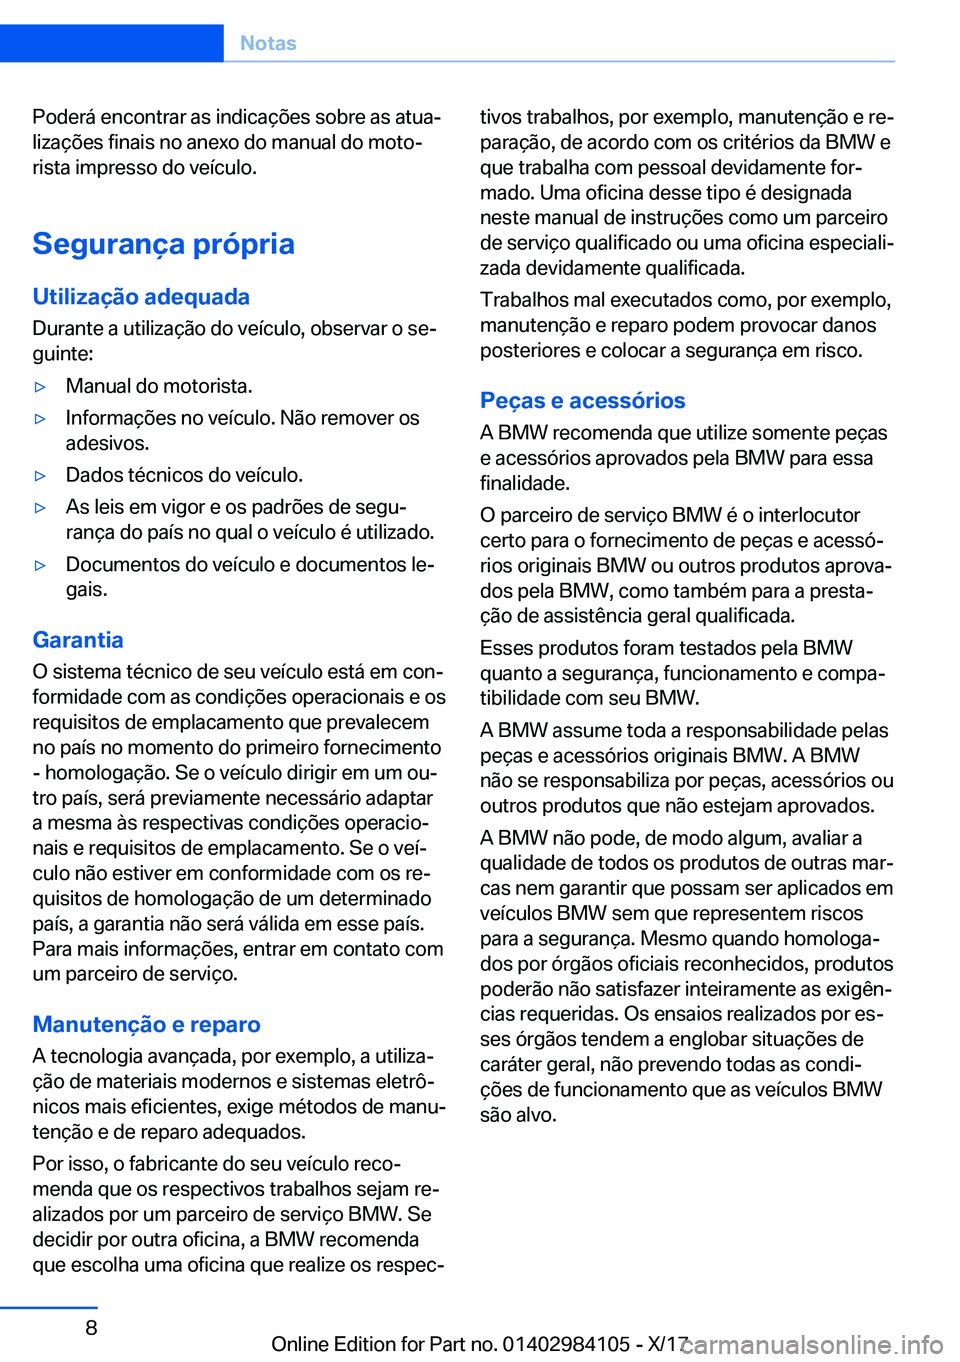 BMW 3 SERIES 2018  Manual do condutor (in Portuguese) �P�o�d�e�r�á� �e�n�c�o�n�t�r�a�r� �a�s� �i�n�d�i�c�a�